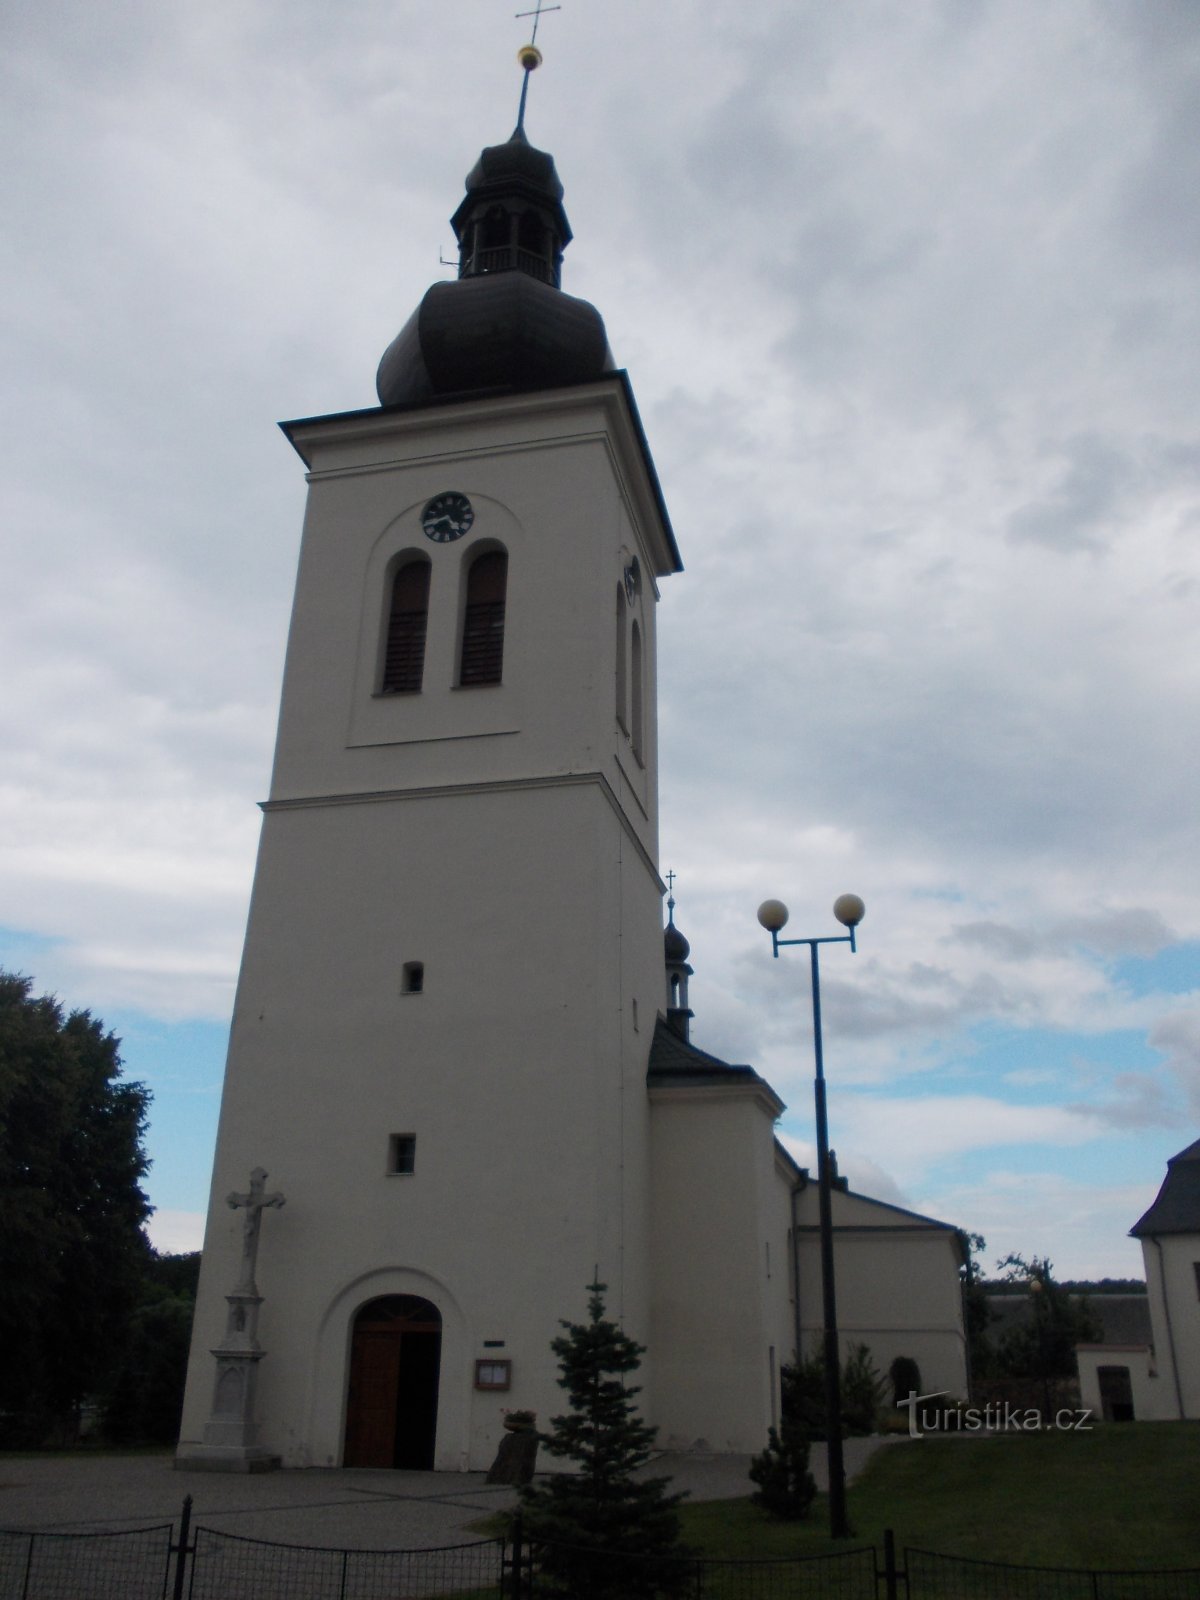 Église de la Nativité de la Vierge Marie à Stěbořice